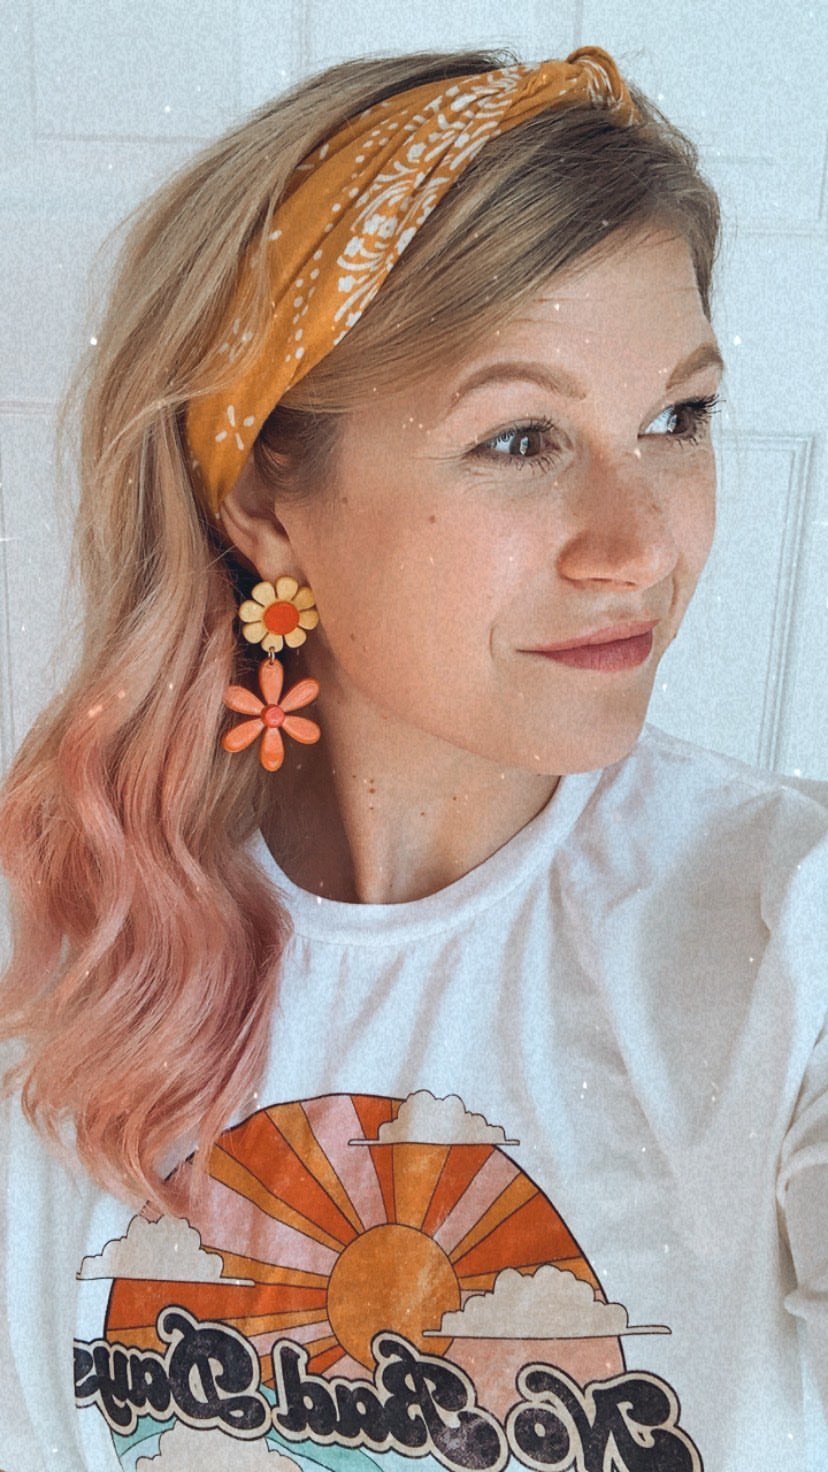 Orange and Yellow Mod Flower Earrings Groovy Girl - Relic828